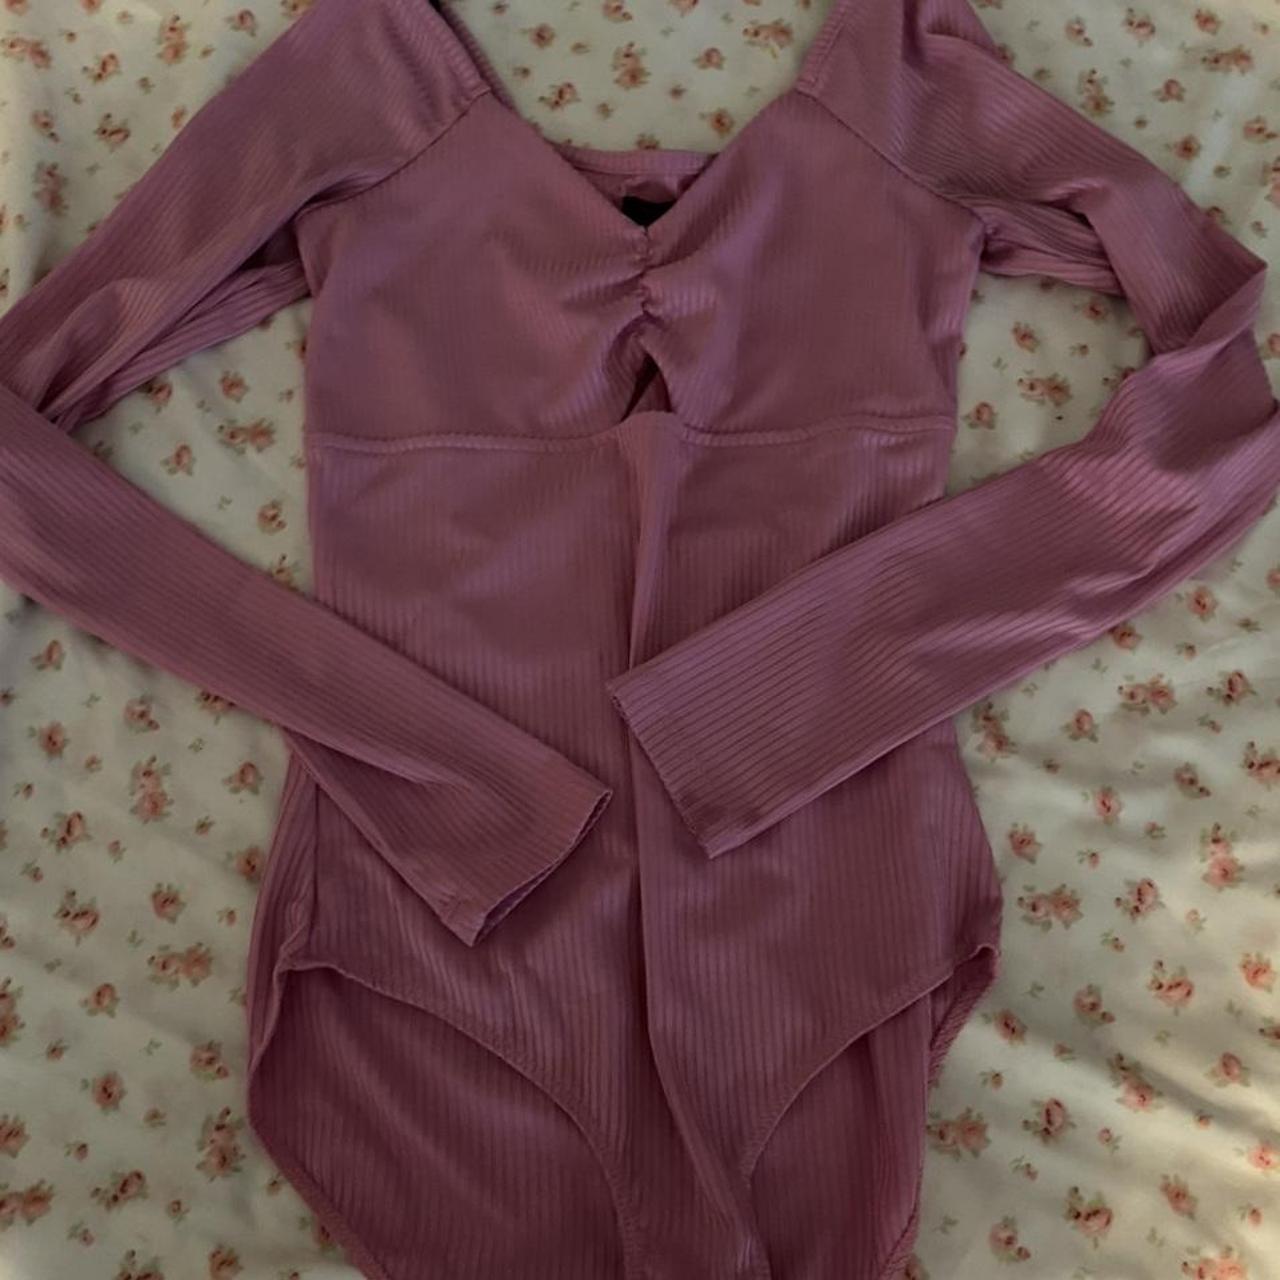 hot pink body suit 🔥 🔥🔥🔥 - Depop